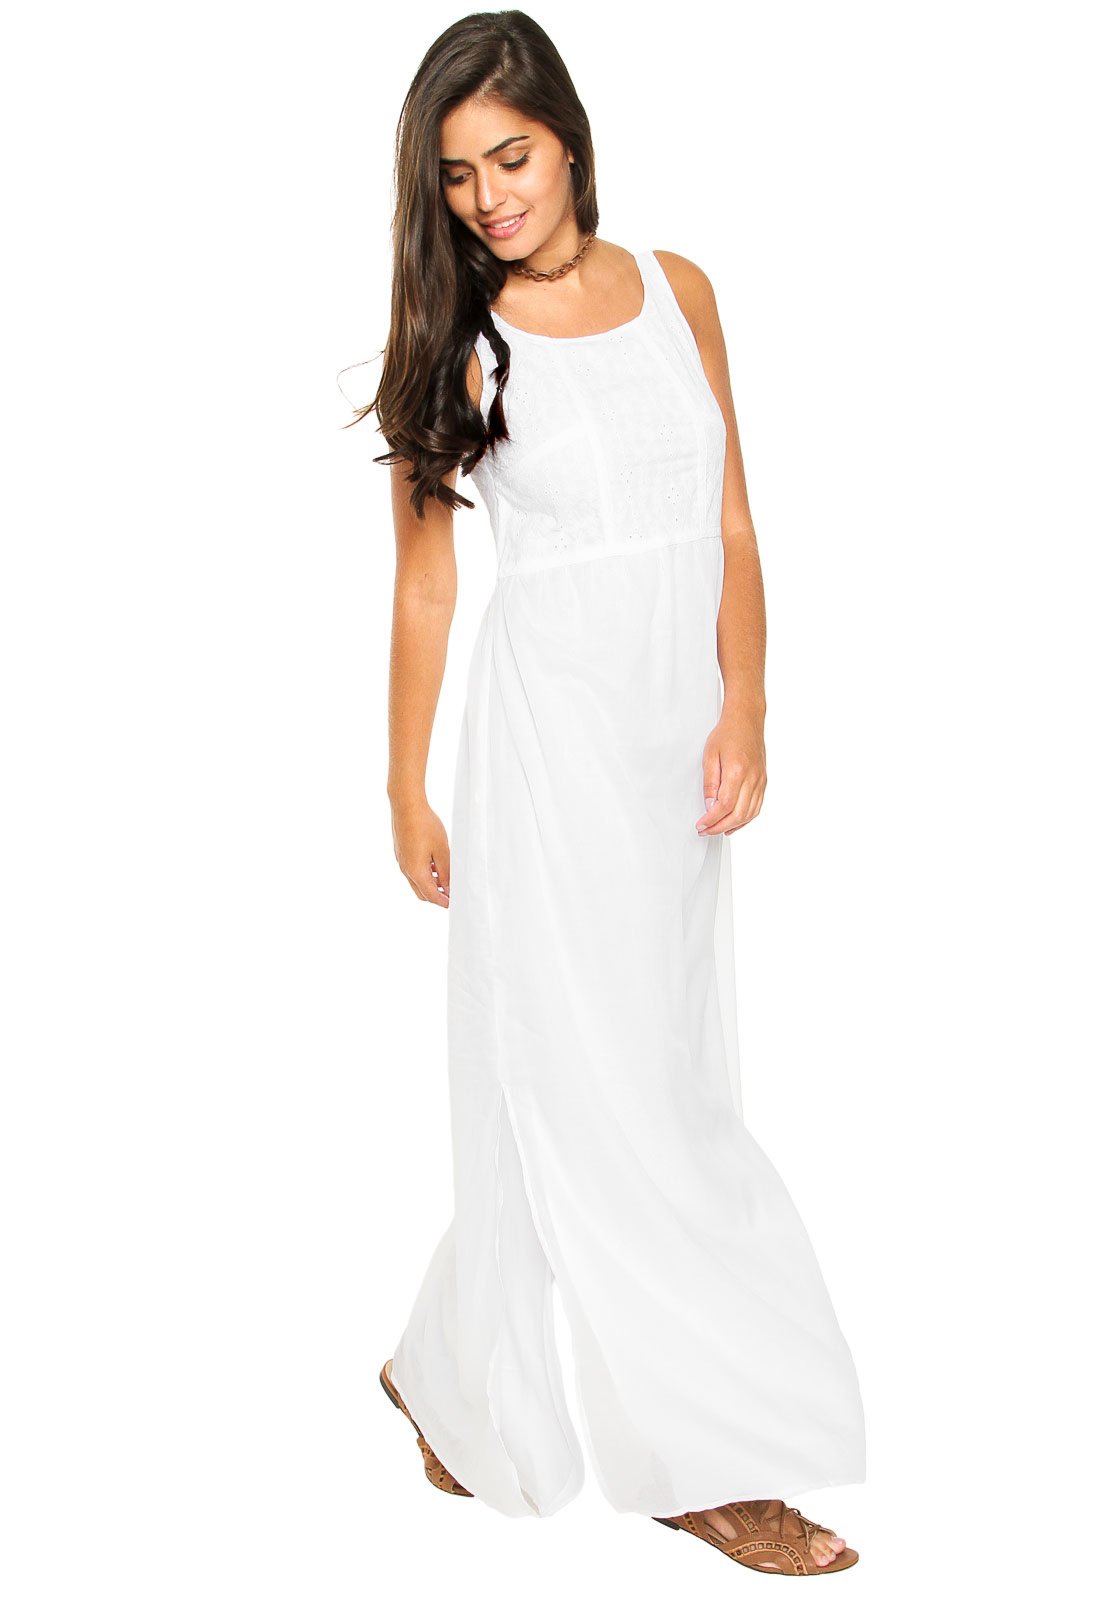 vestido branco cantao